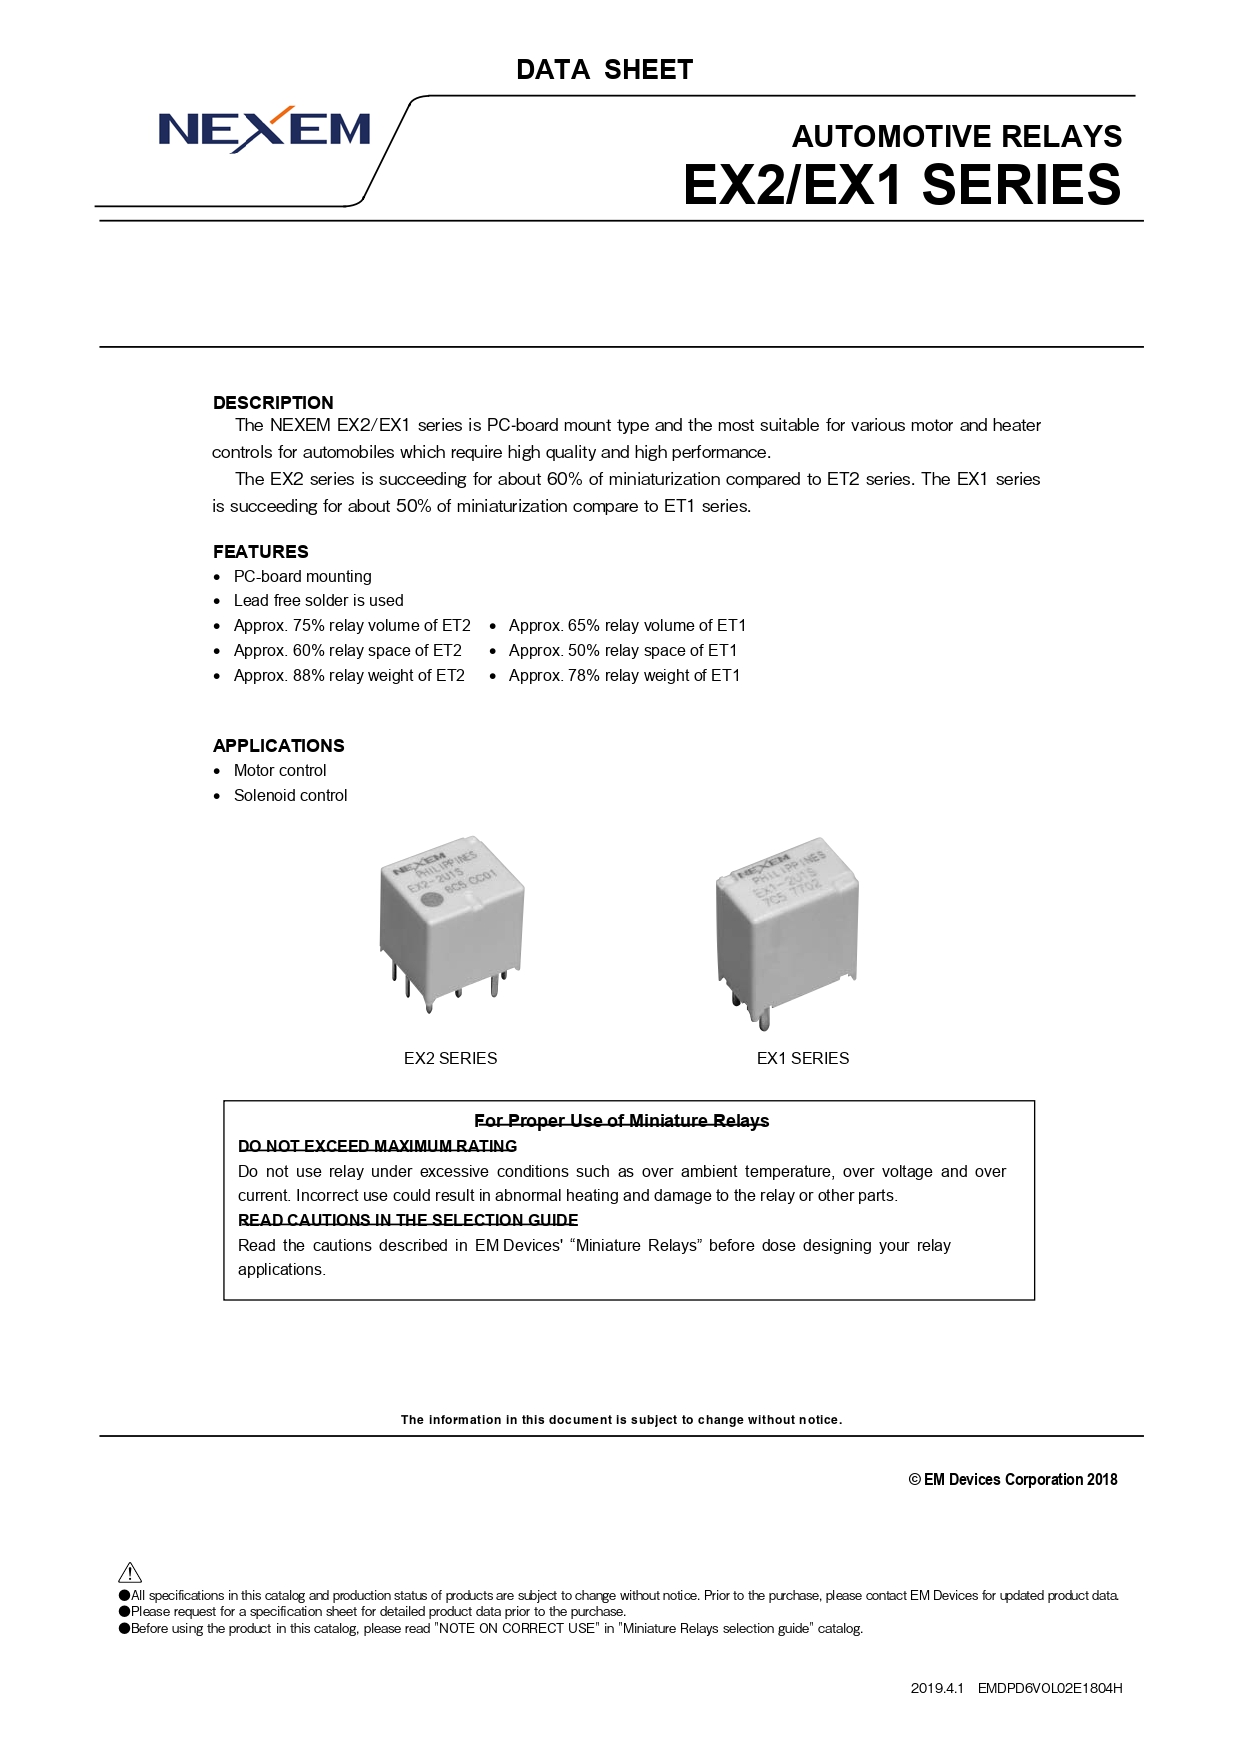 Miniature Power Relay Data Sheet pdfimage